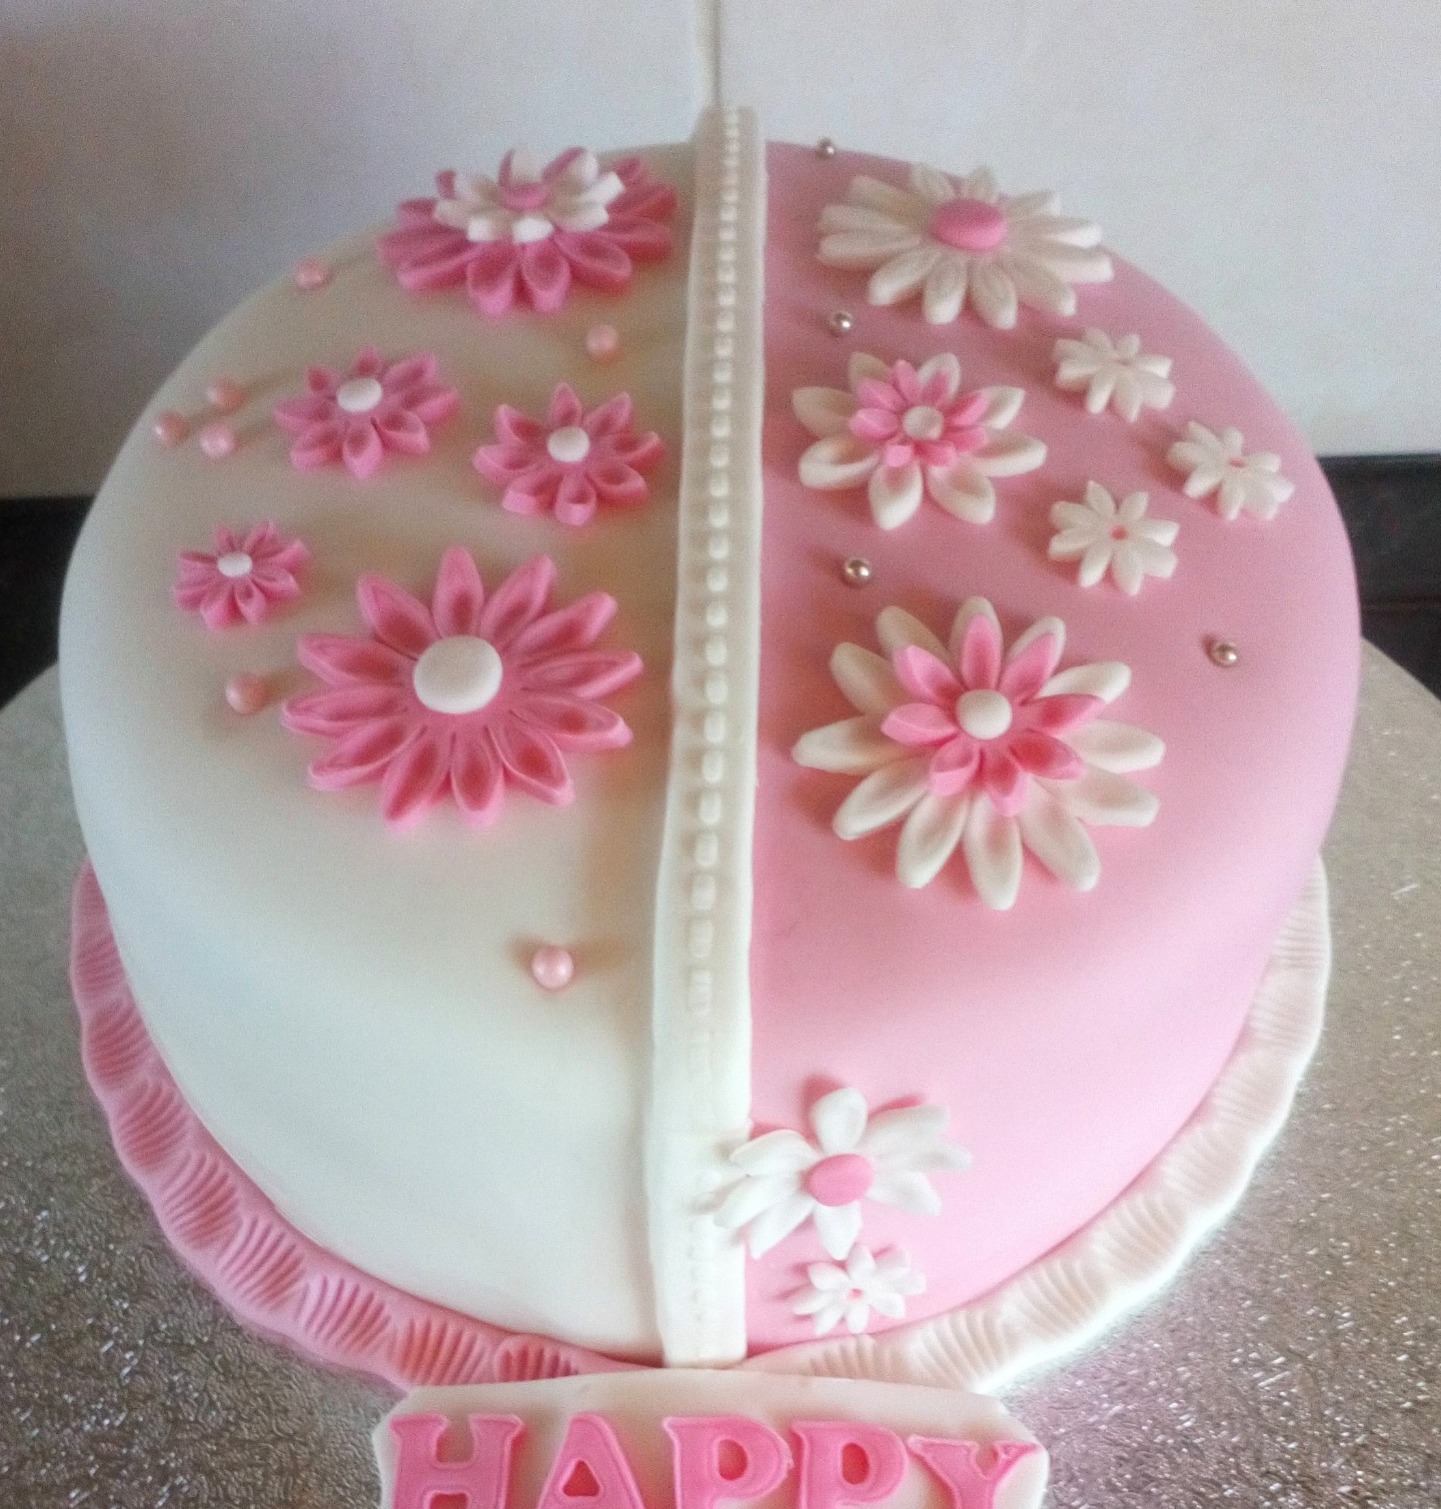 Half pink, half white cake with sugar daisies